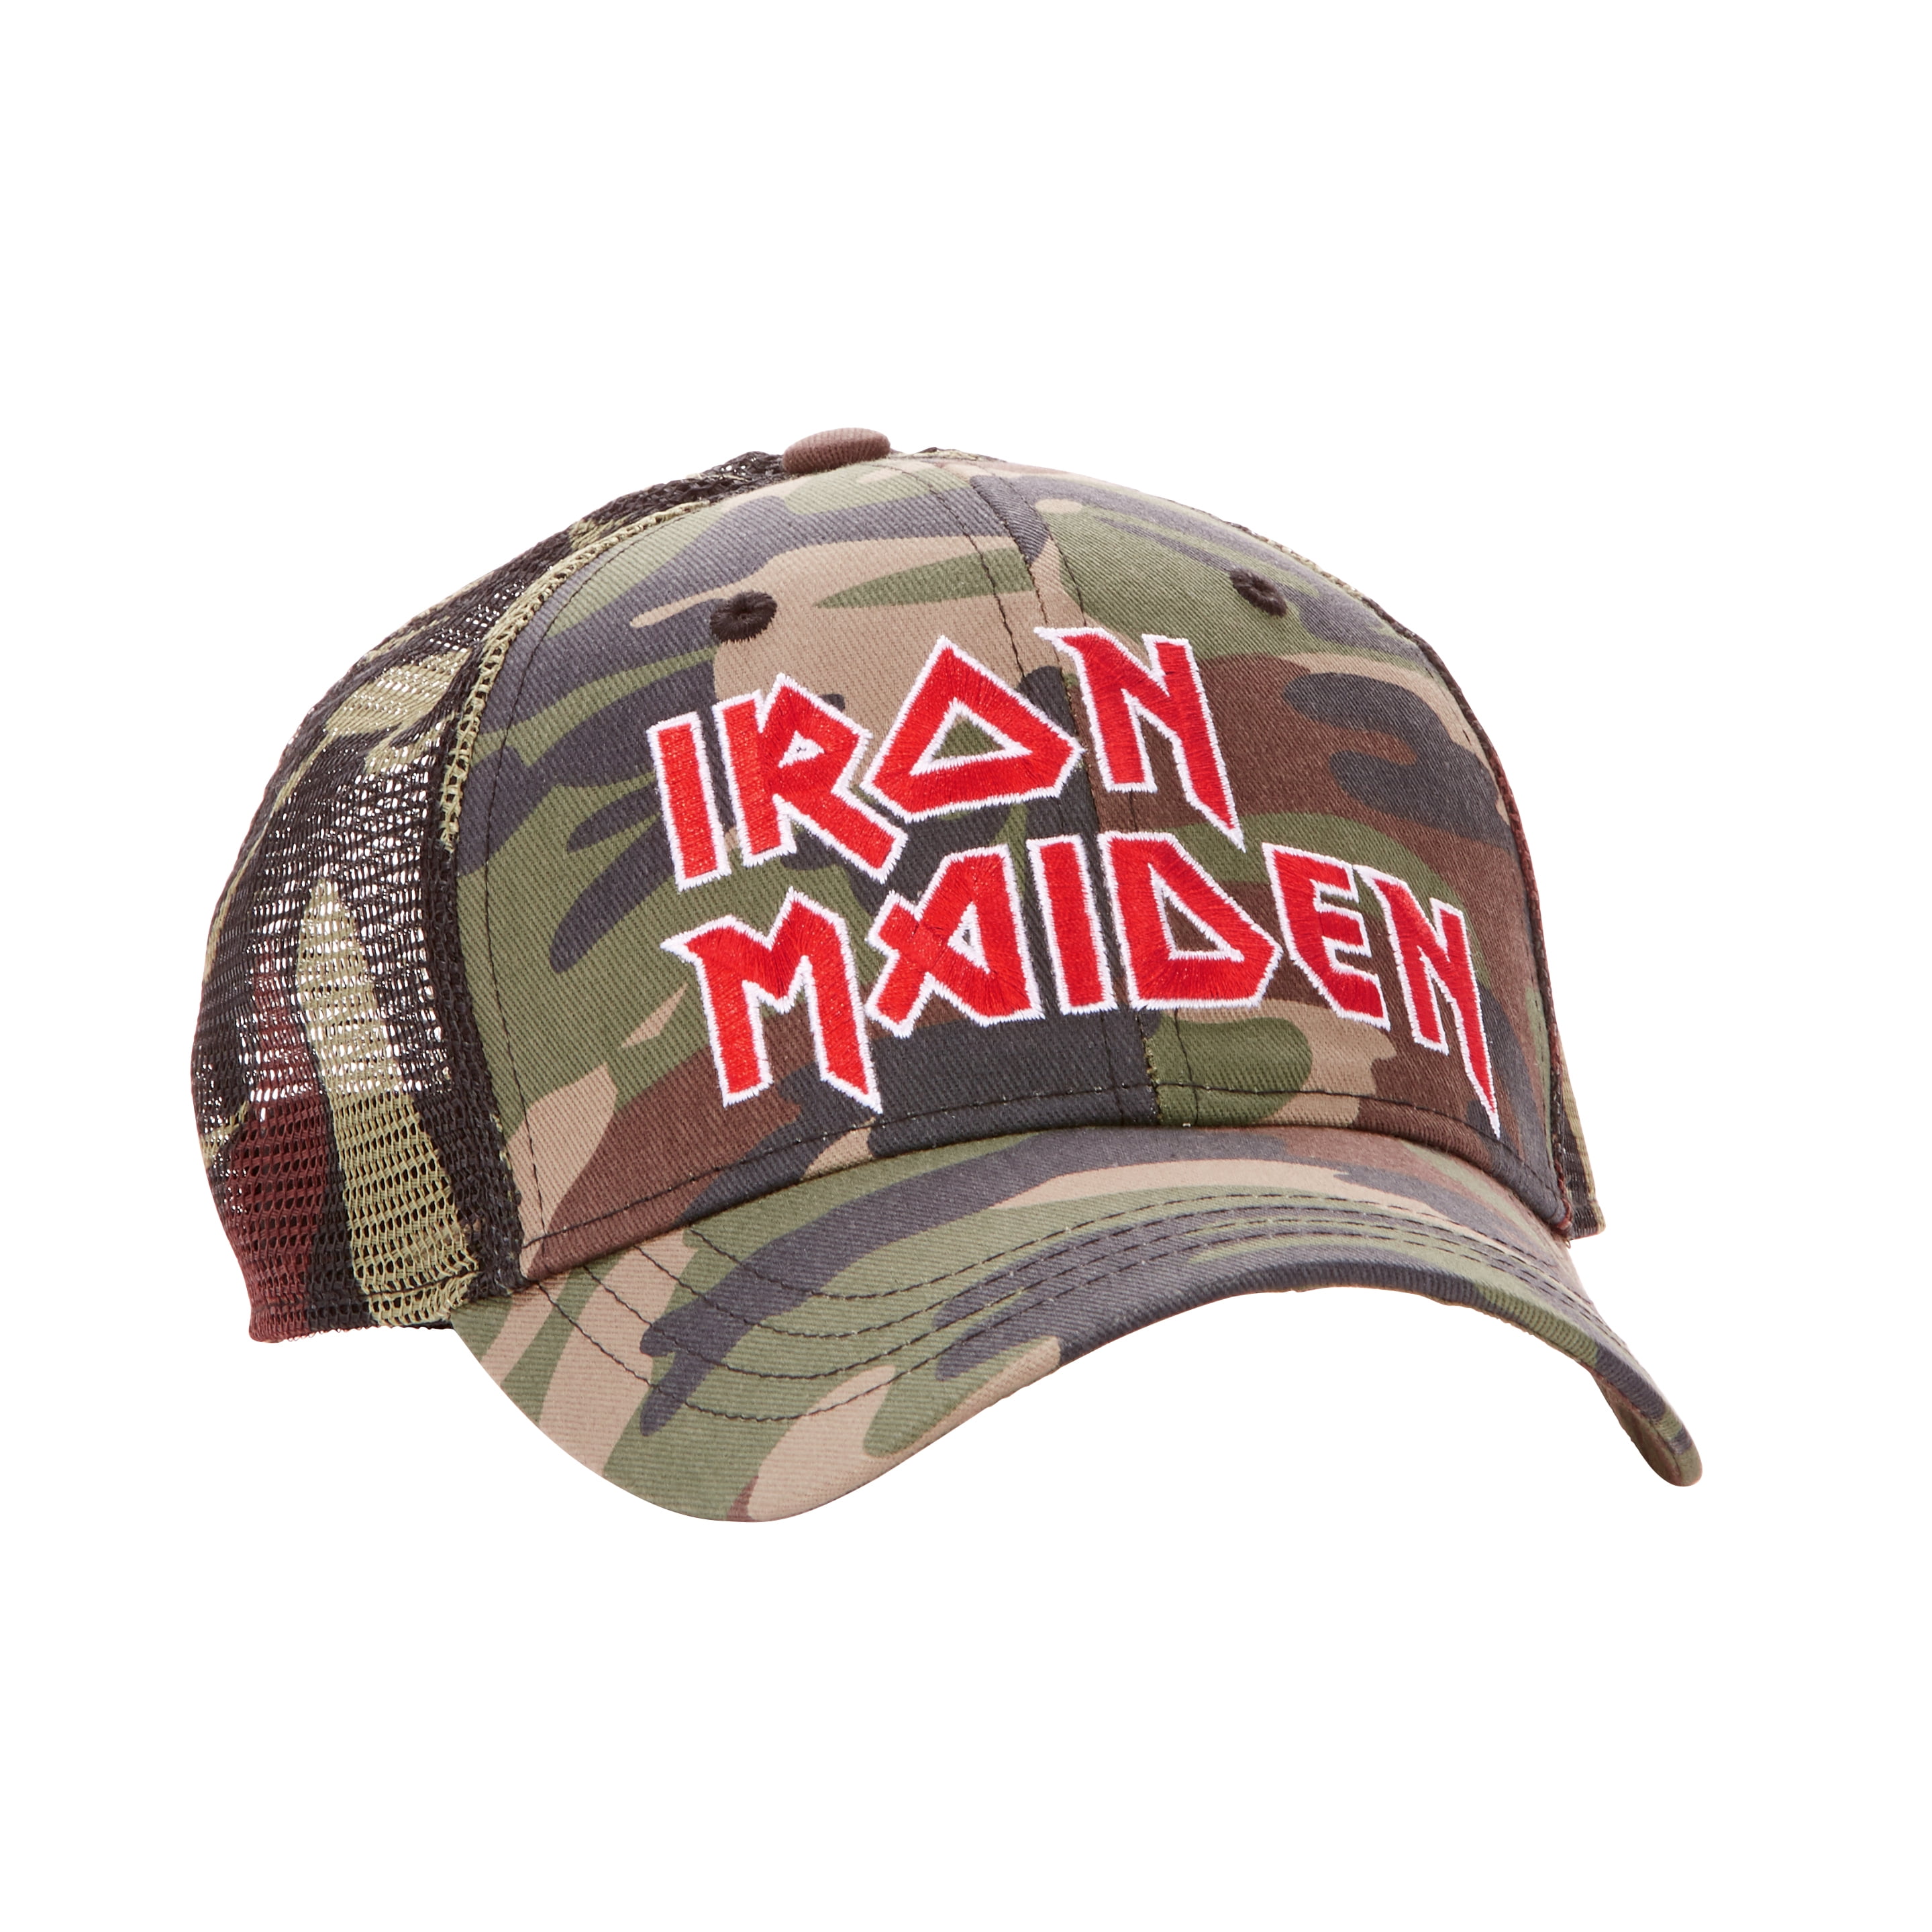 Men's Iron Maiden Camo Baseball Hat with Curved Bill – BrickSeek